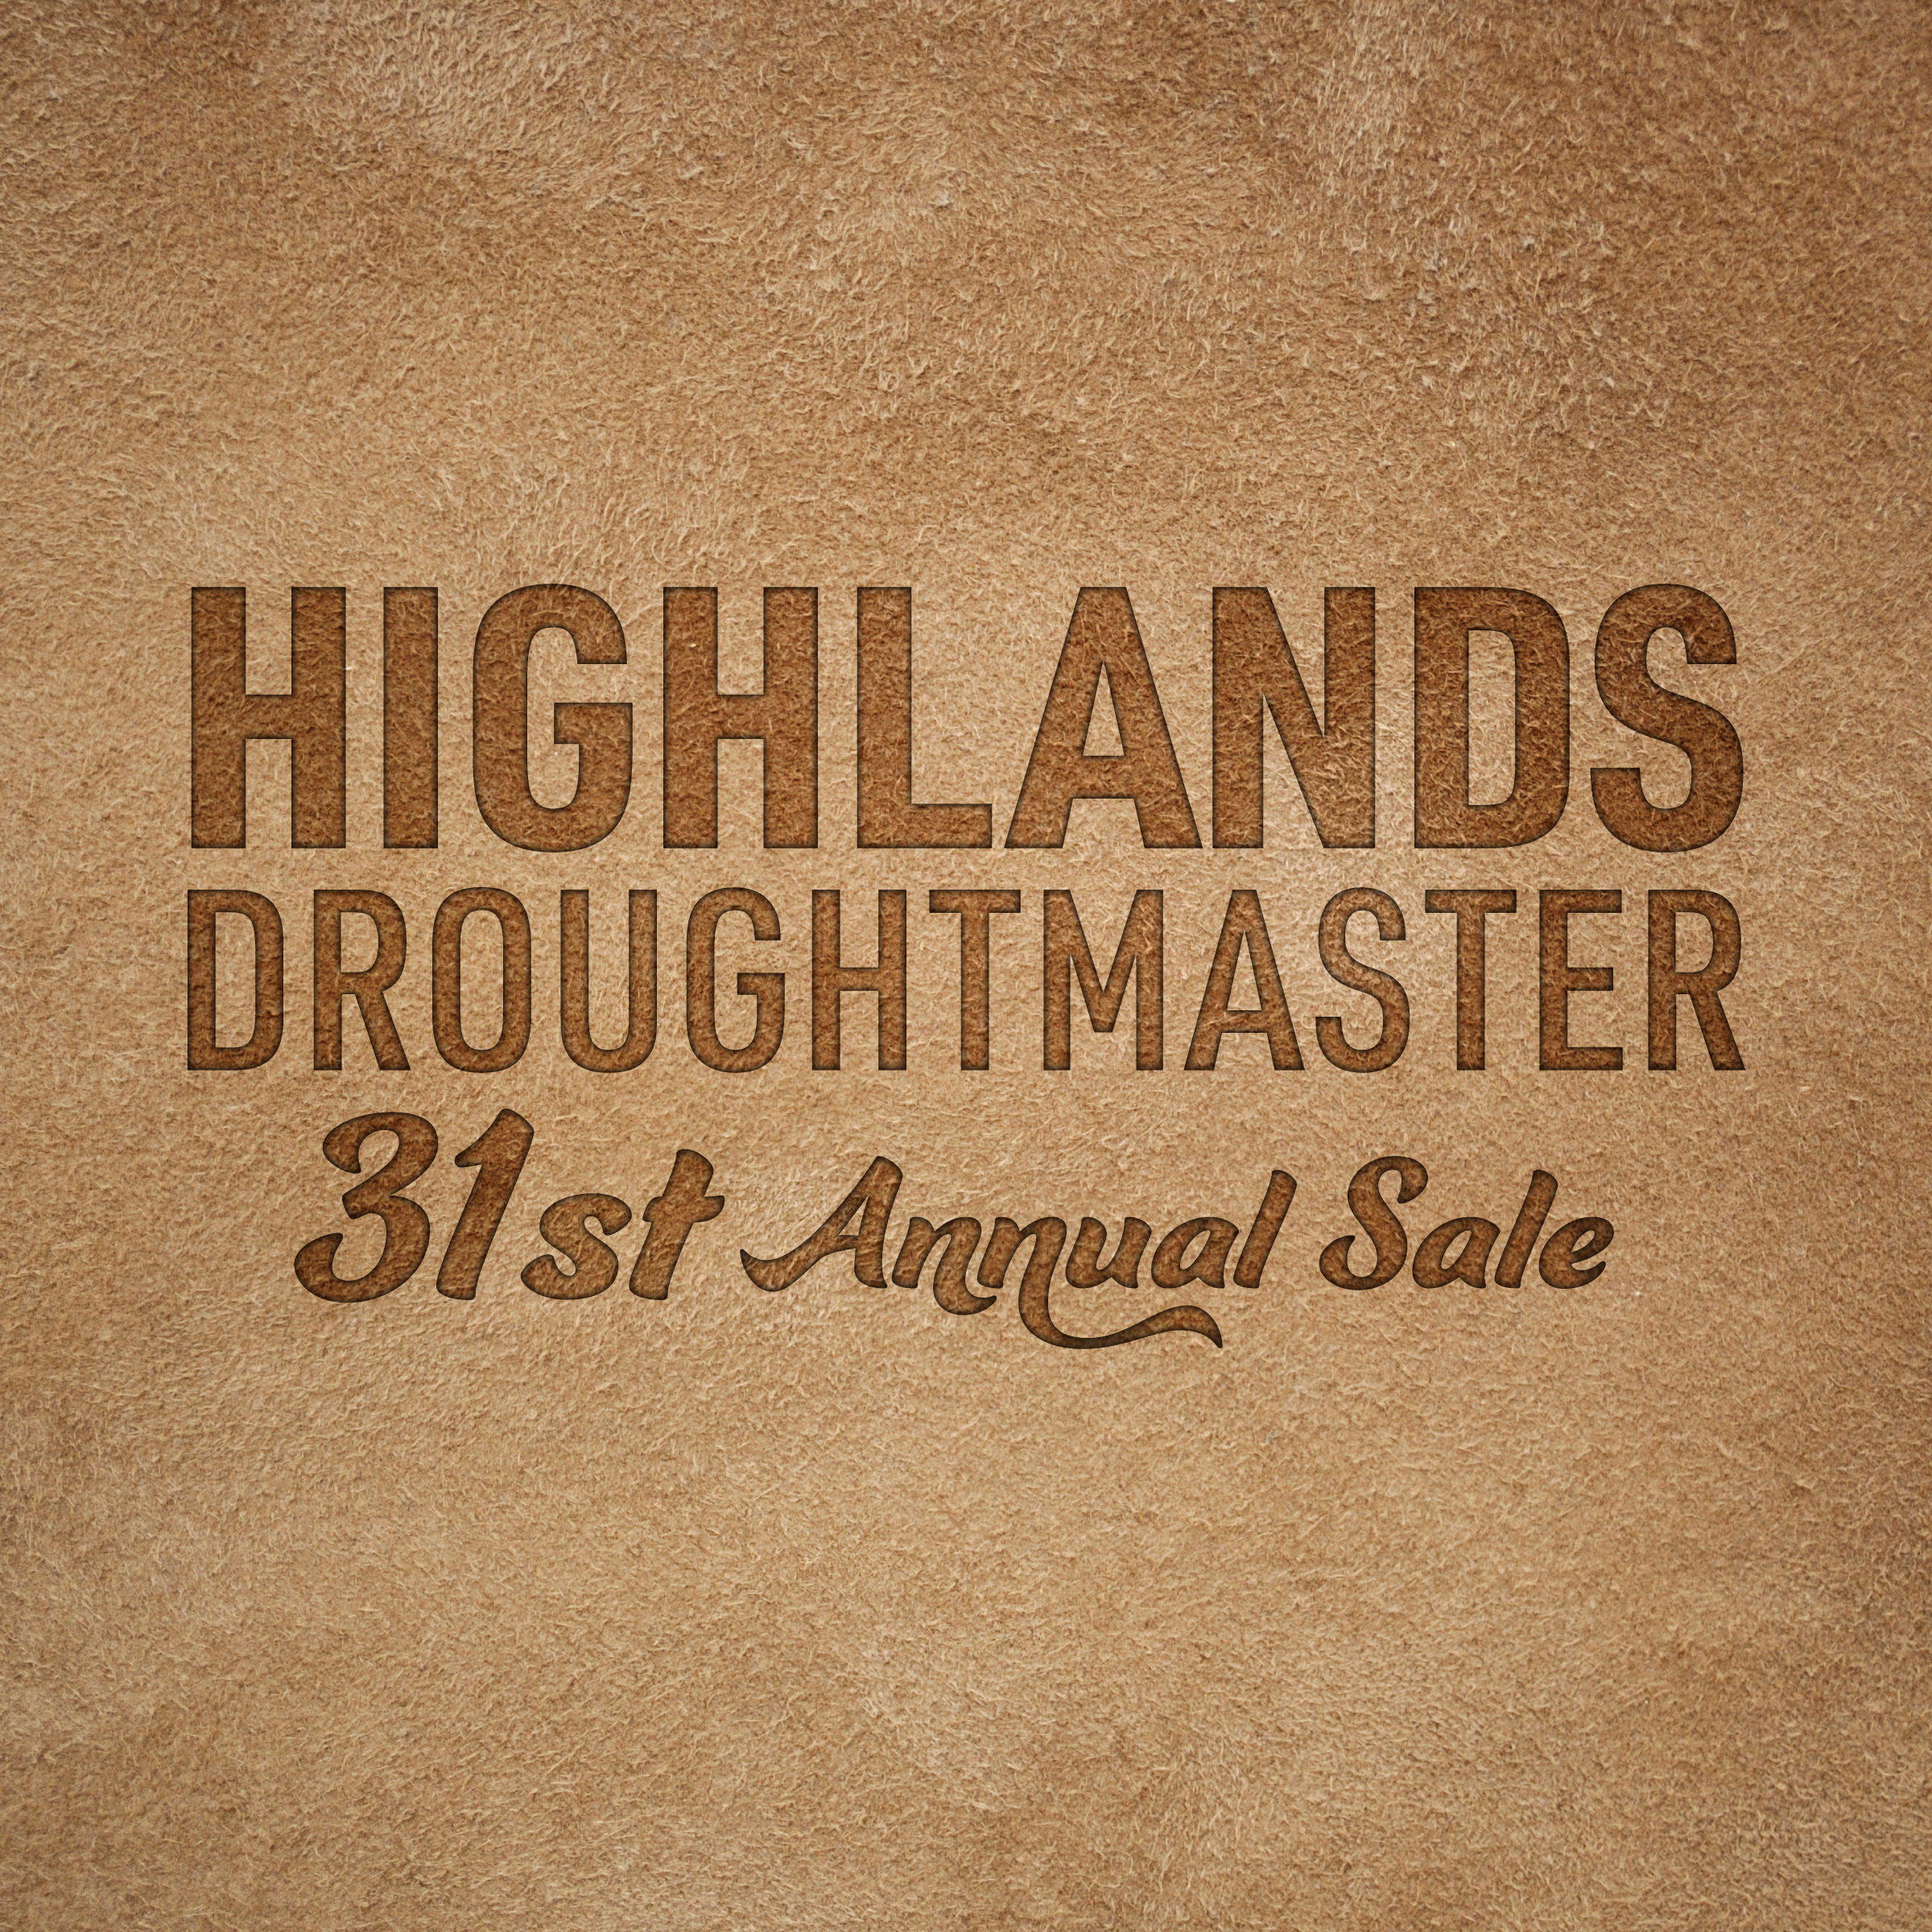 Highlands Droughtmaster Sale